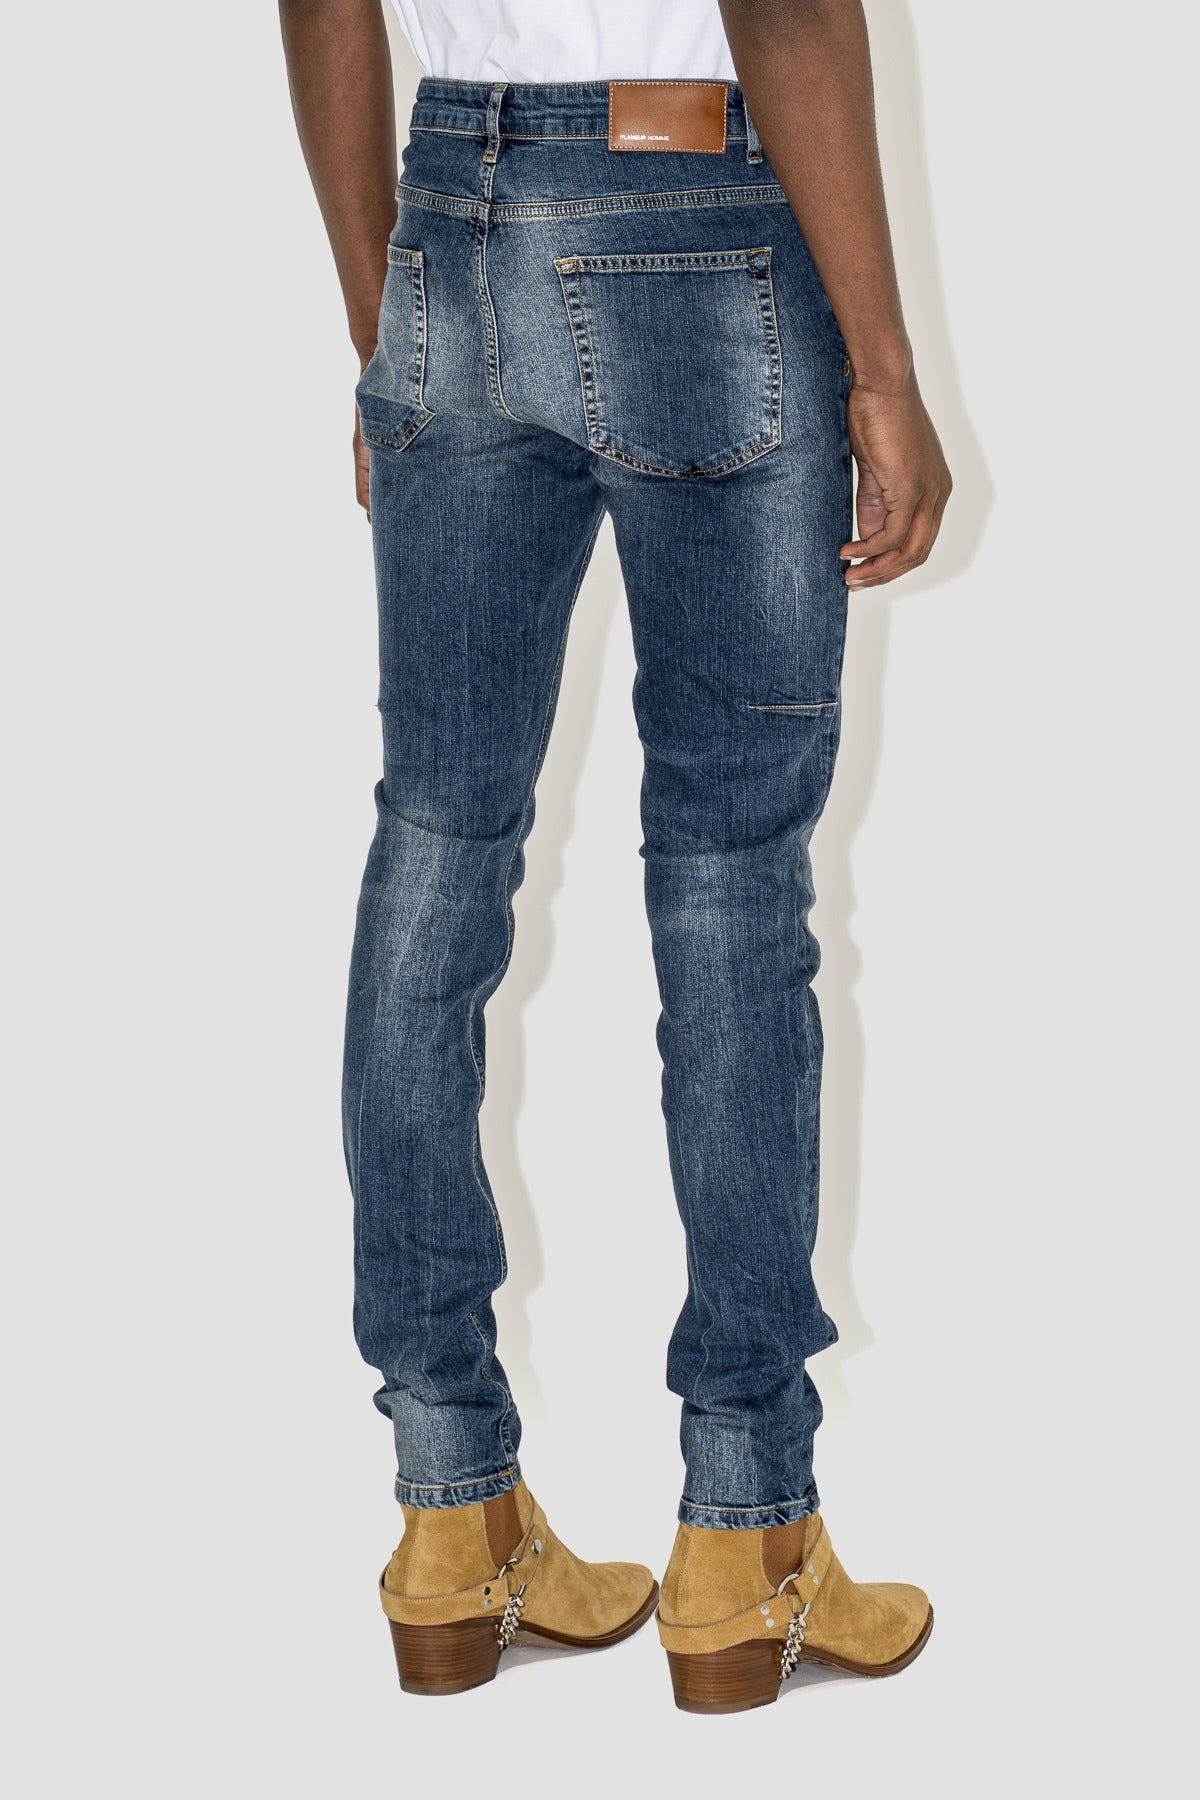 Essential Skinny Jeans in Dark Indigo Denim